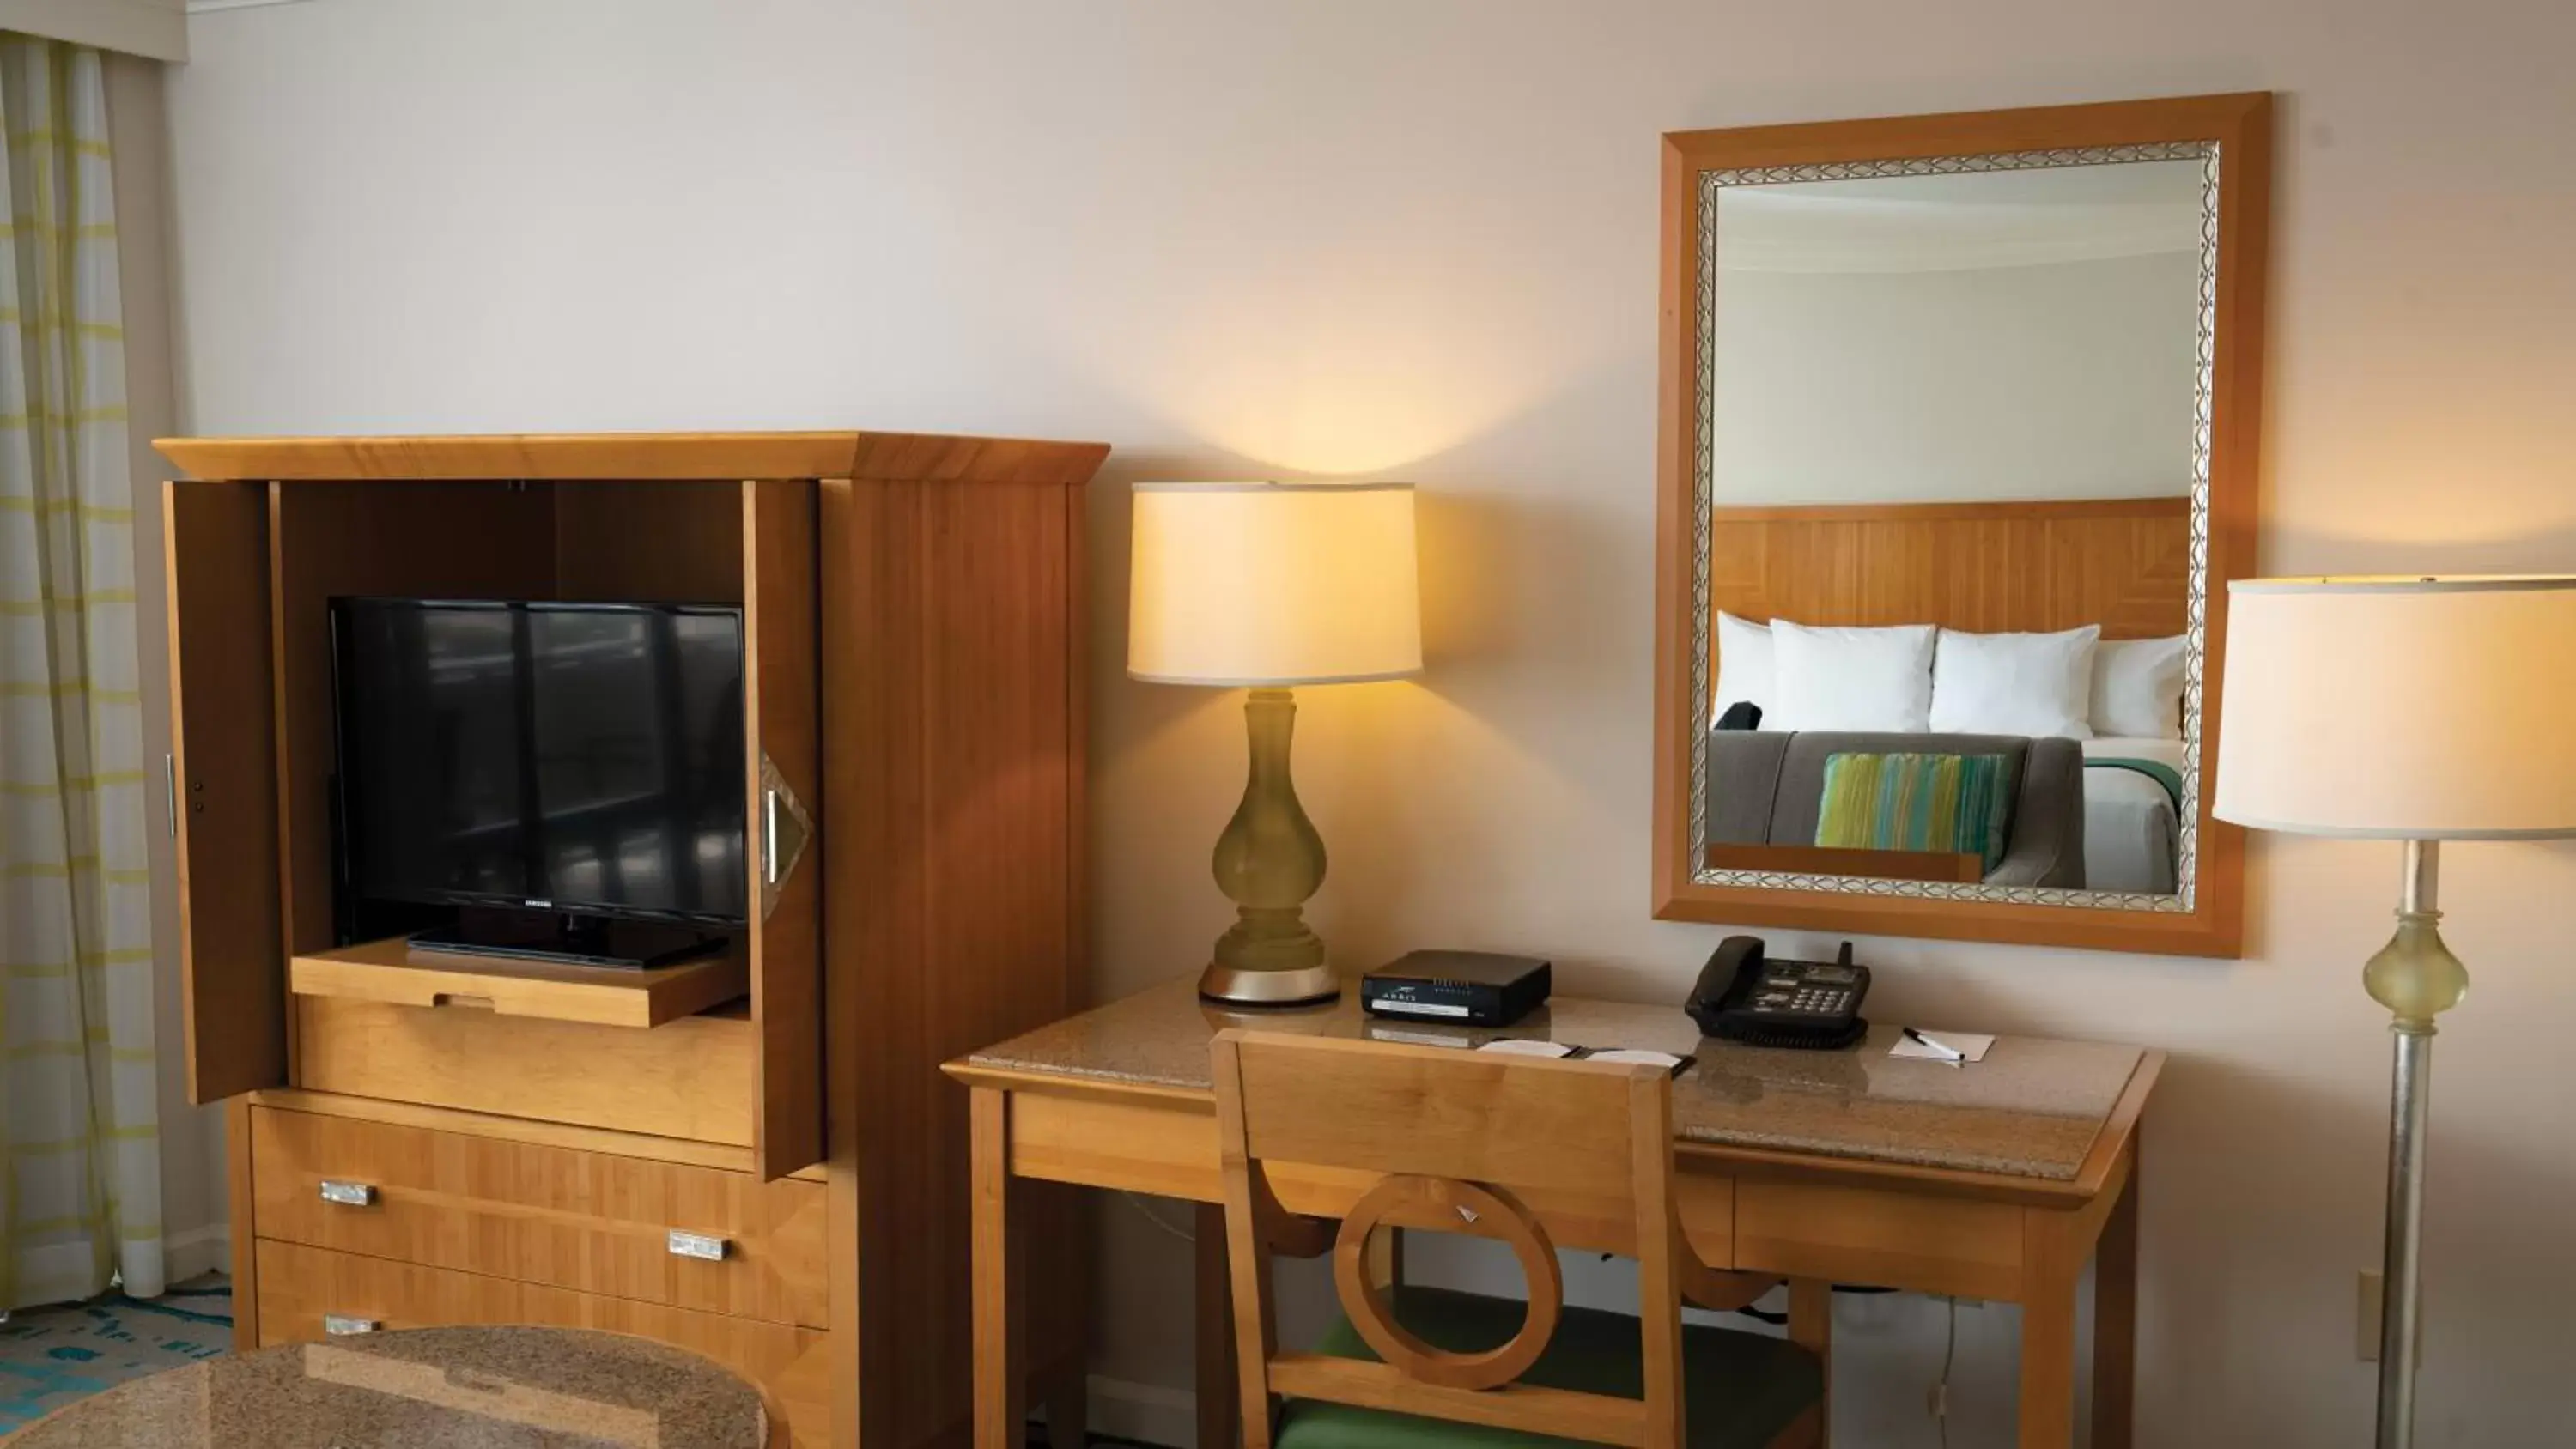 Bedroom, TV/Entertainment Center in Waikiki Marina Resort at the Ilikai